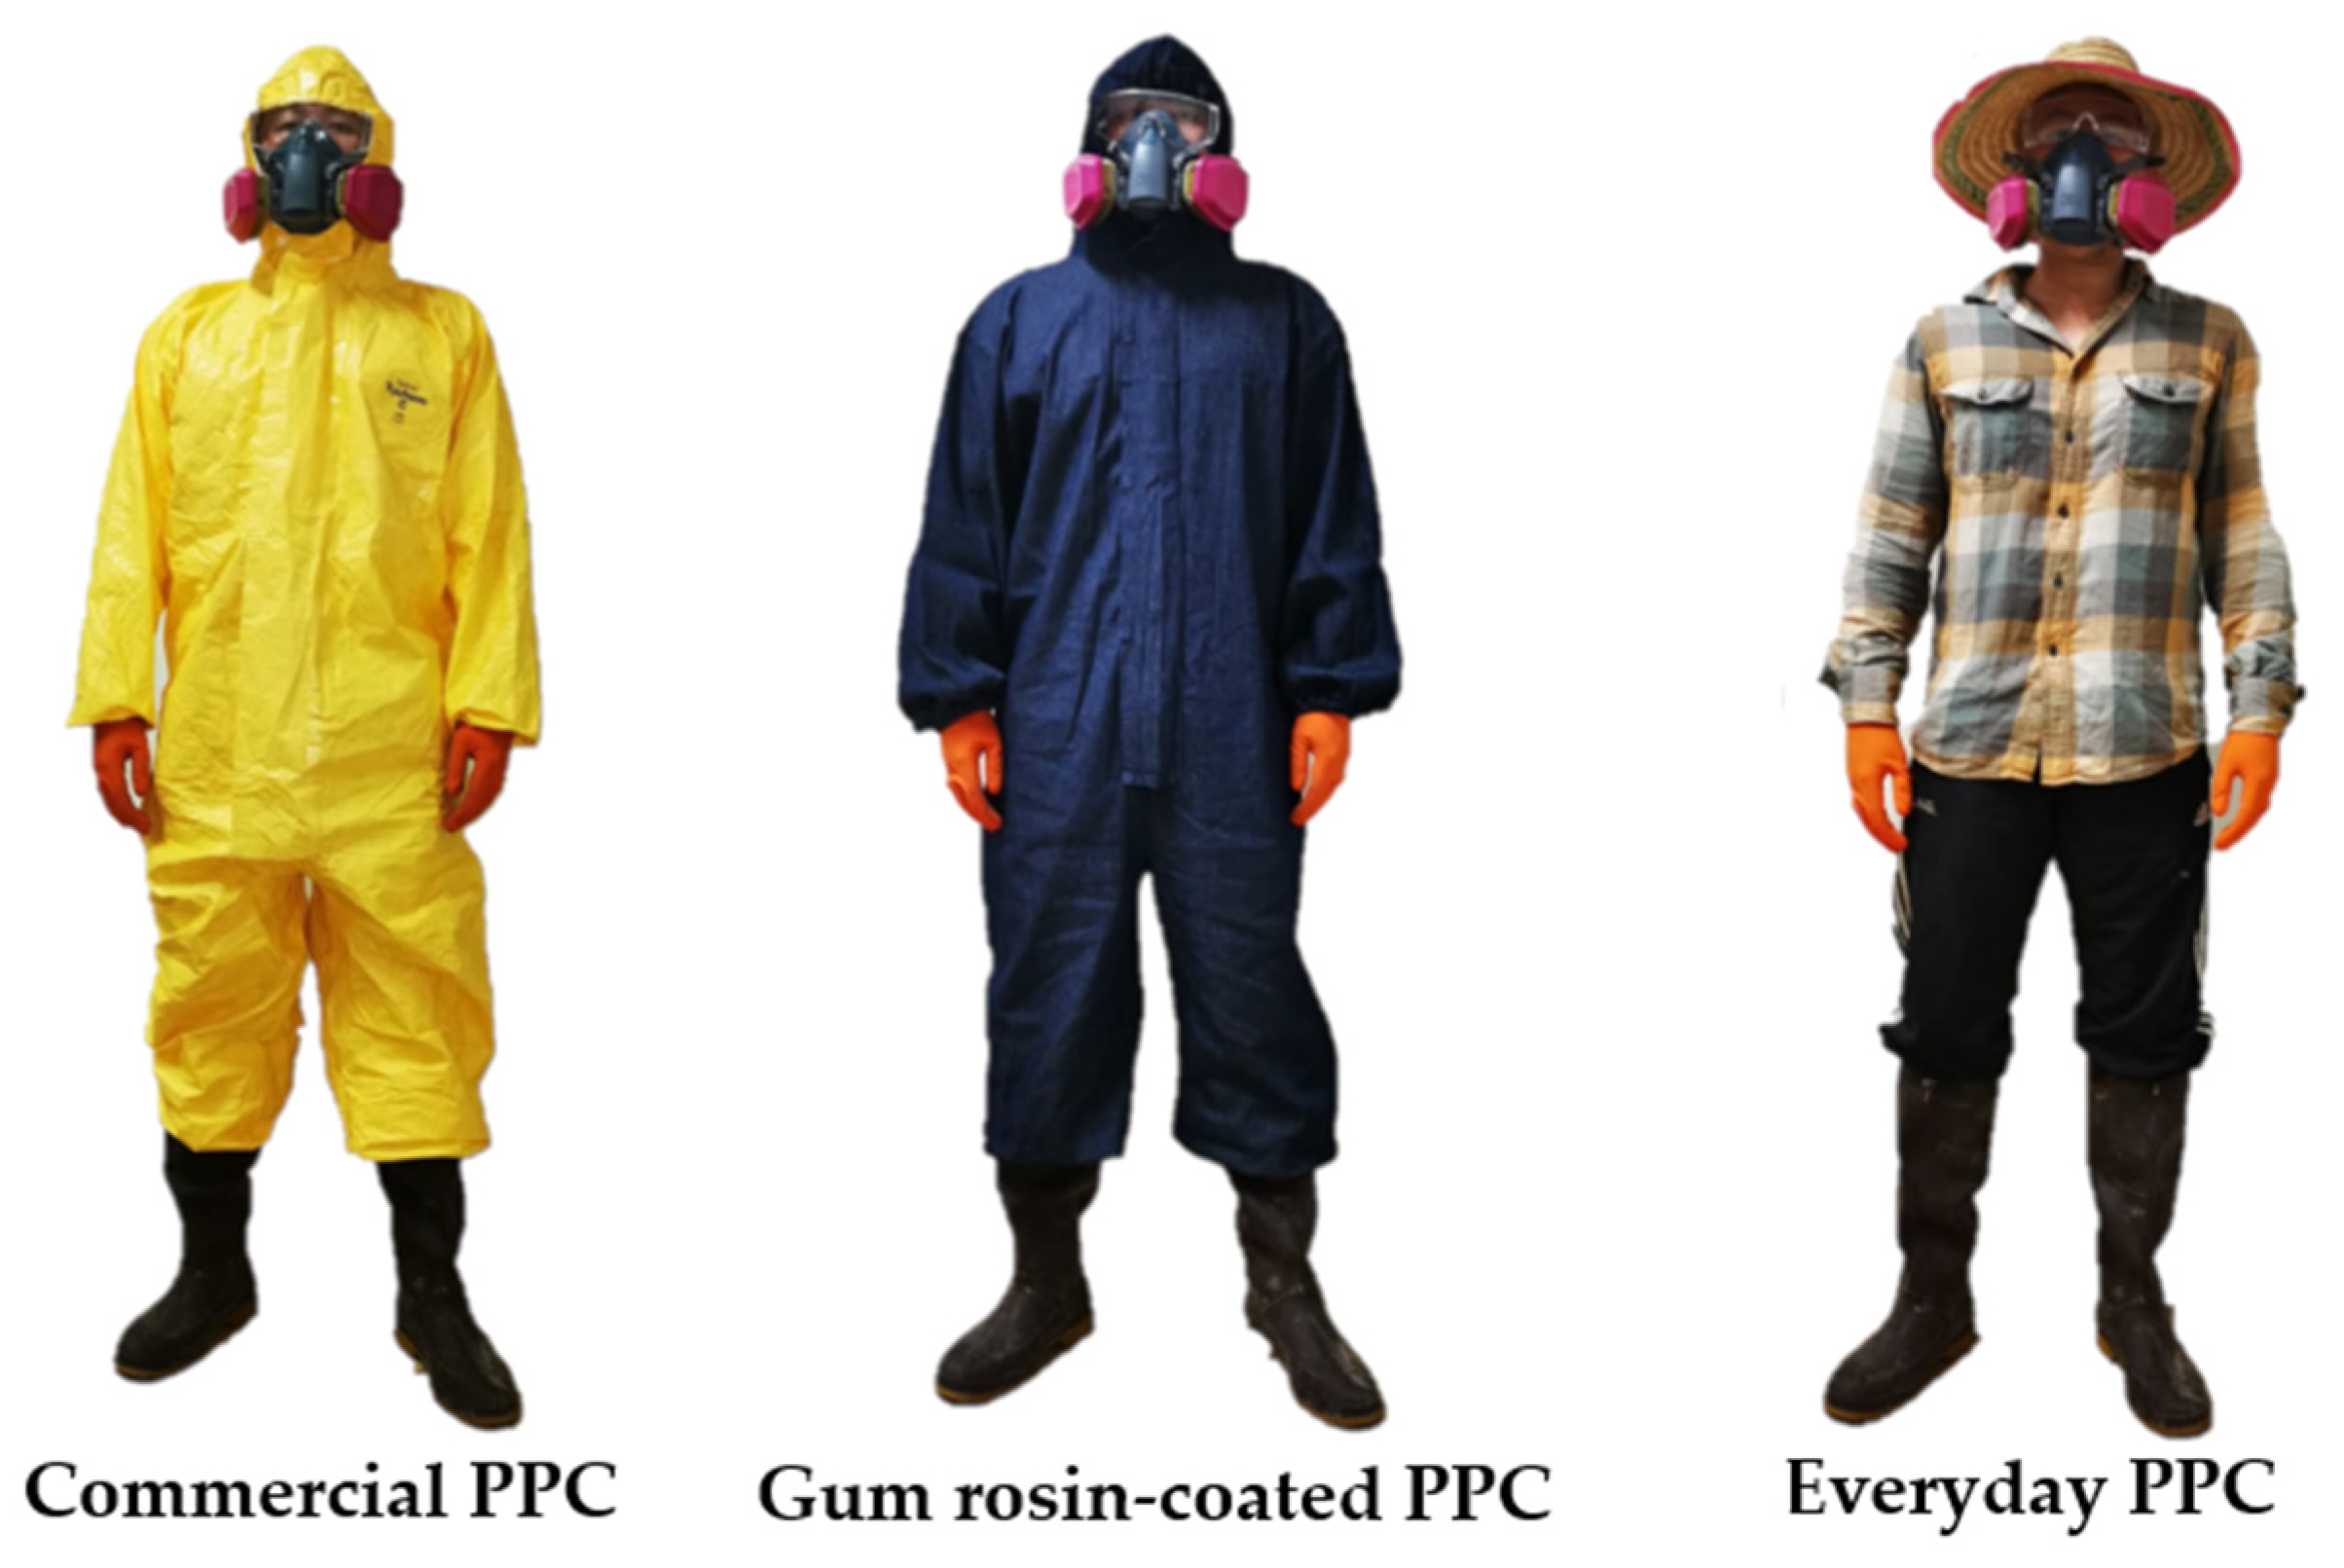 Adult Louisiana Professional Wear Waterproof Rain/Chemical